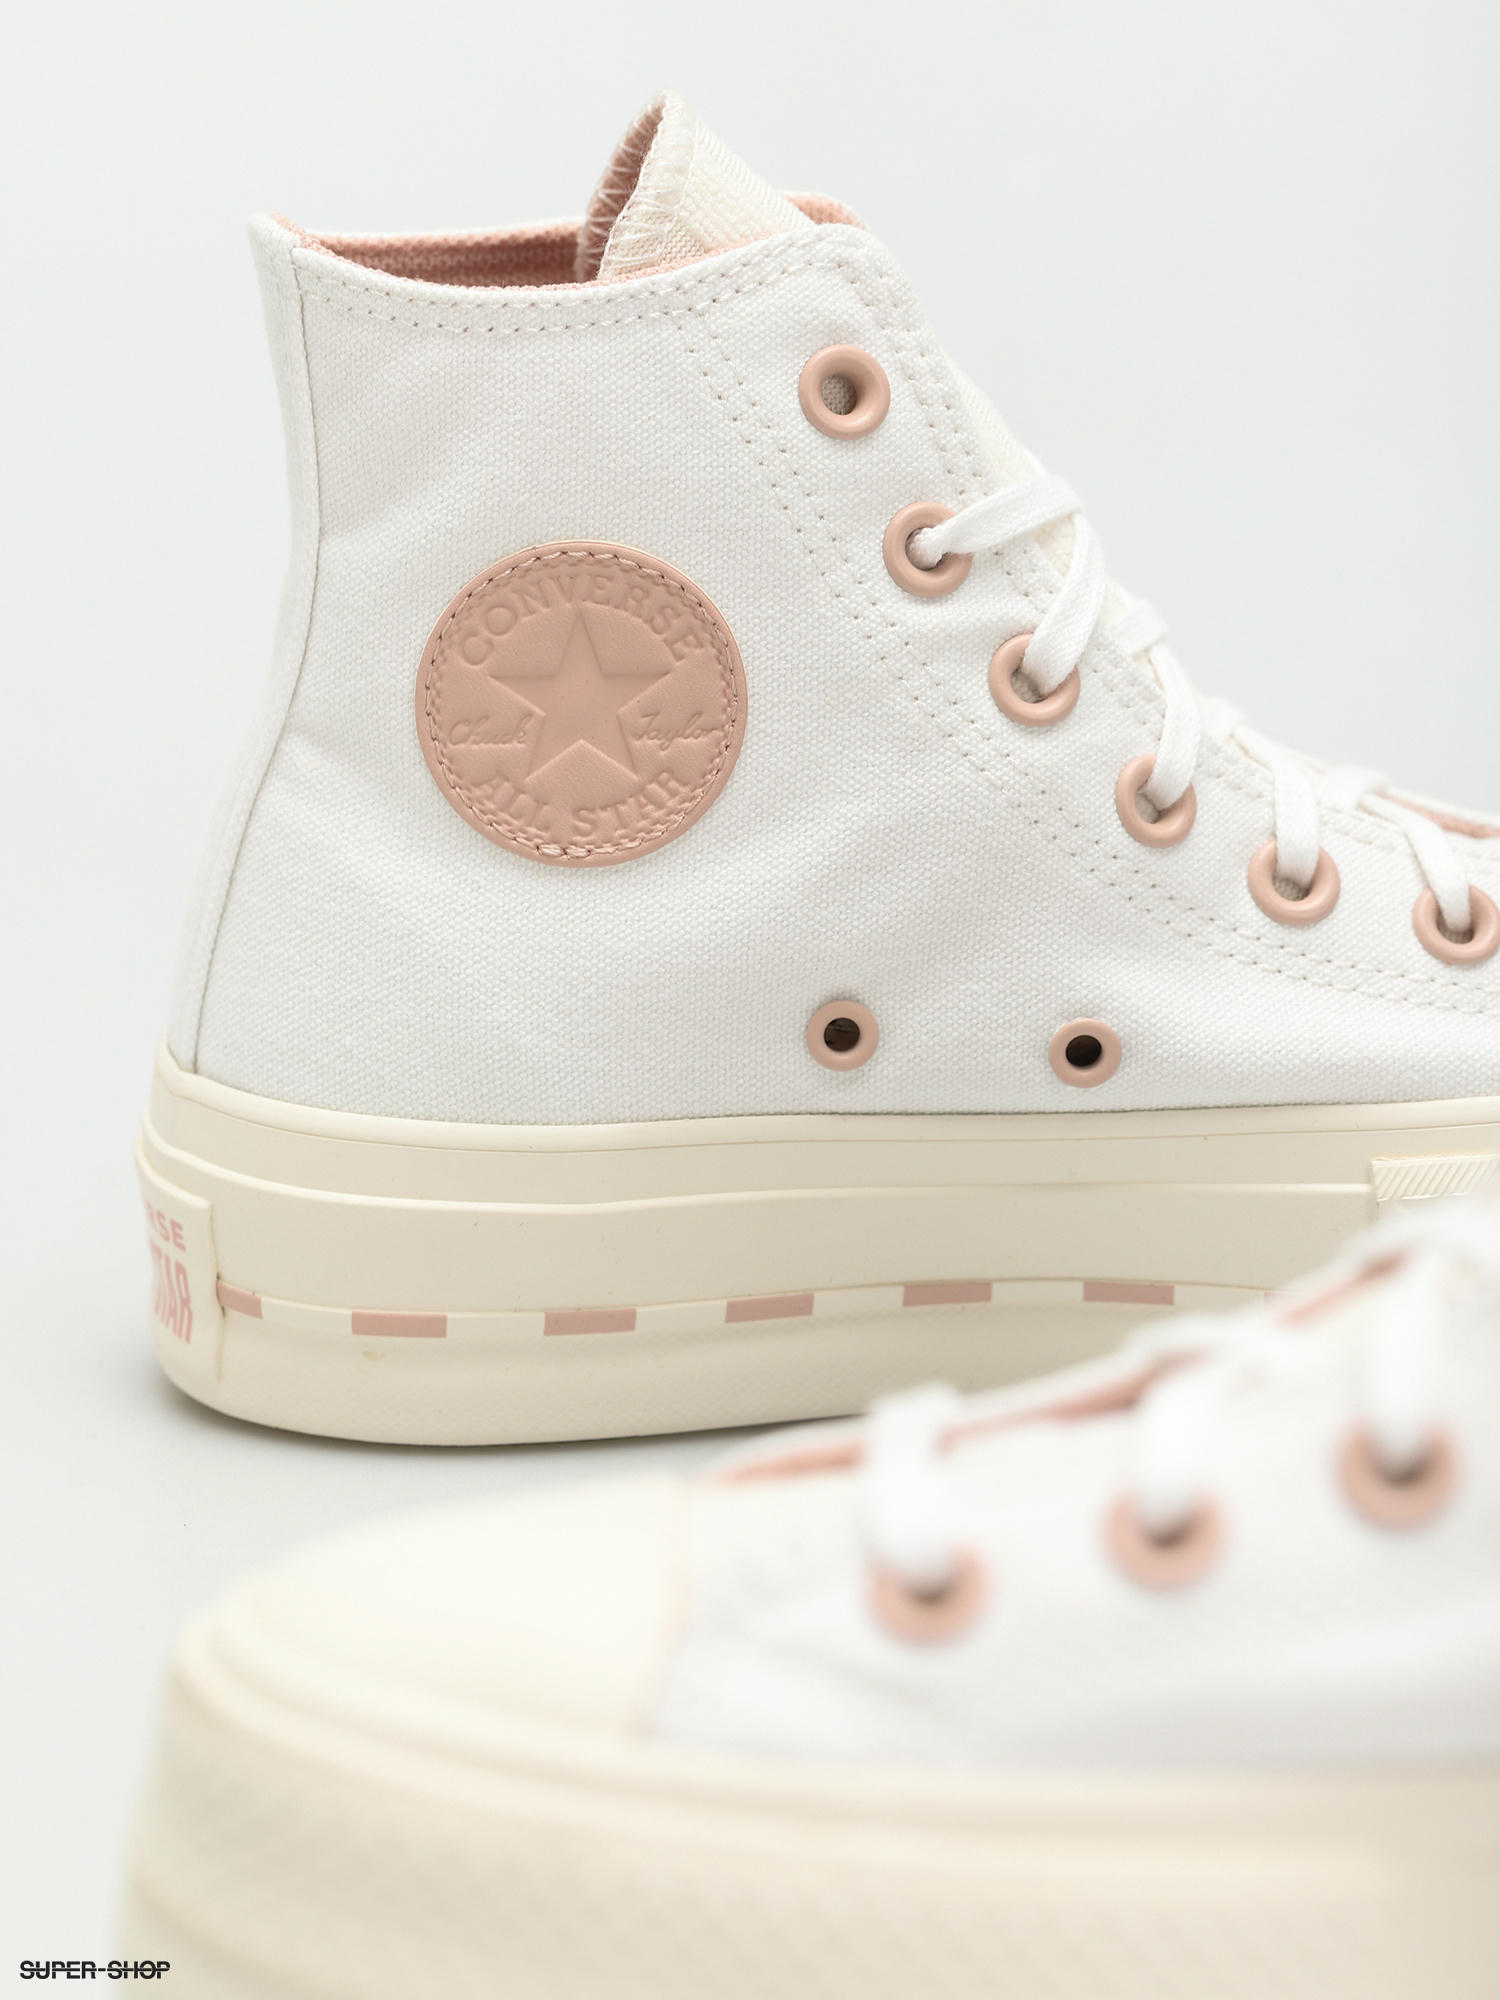 pink white converse